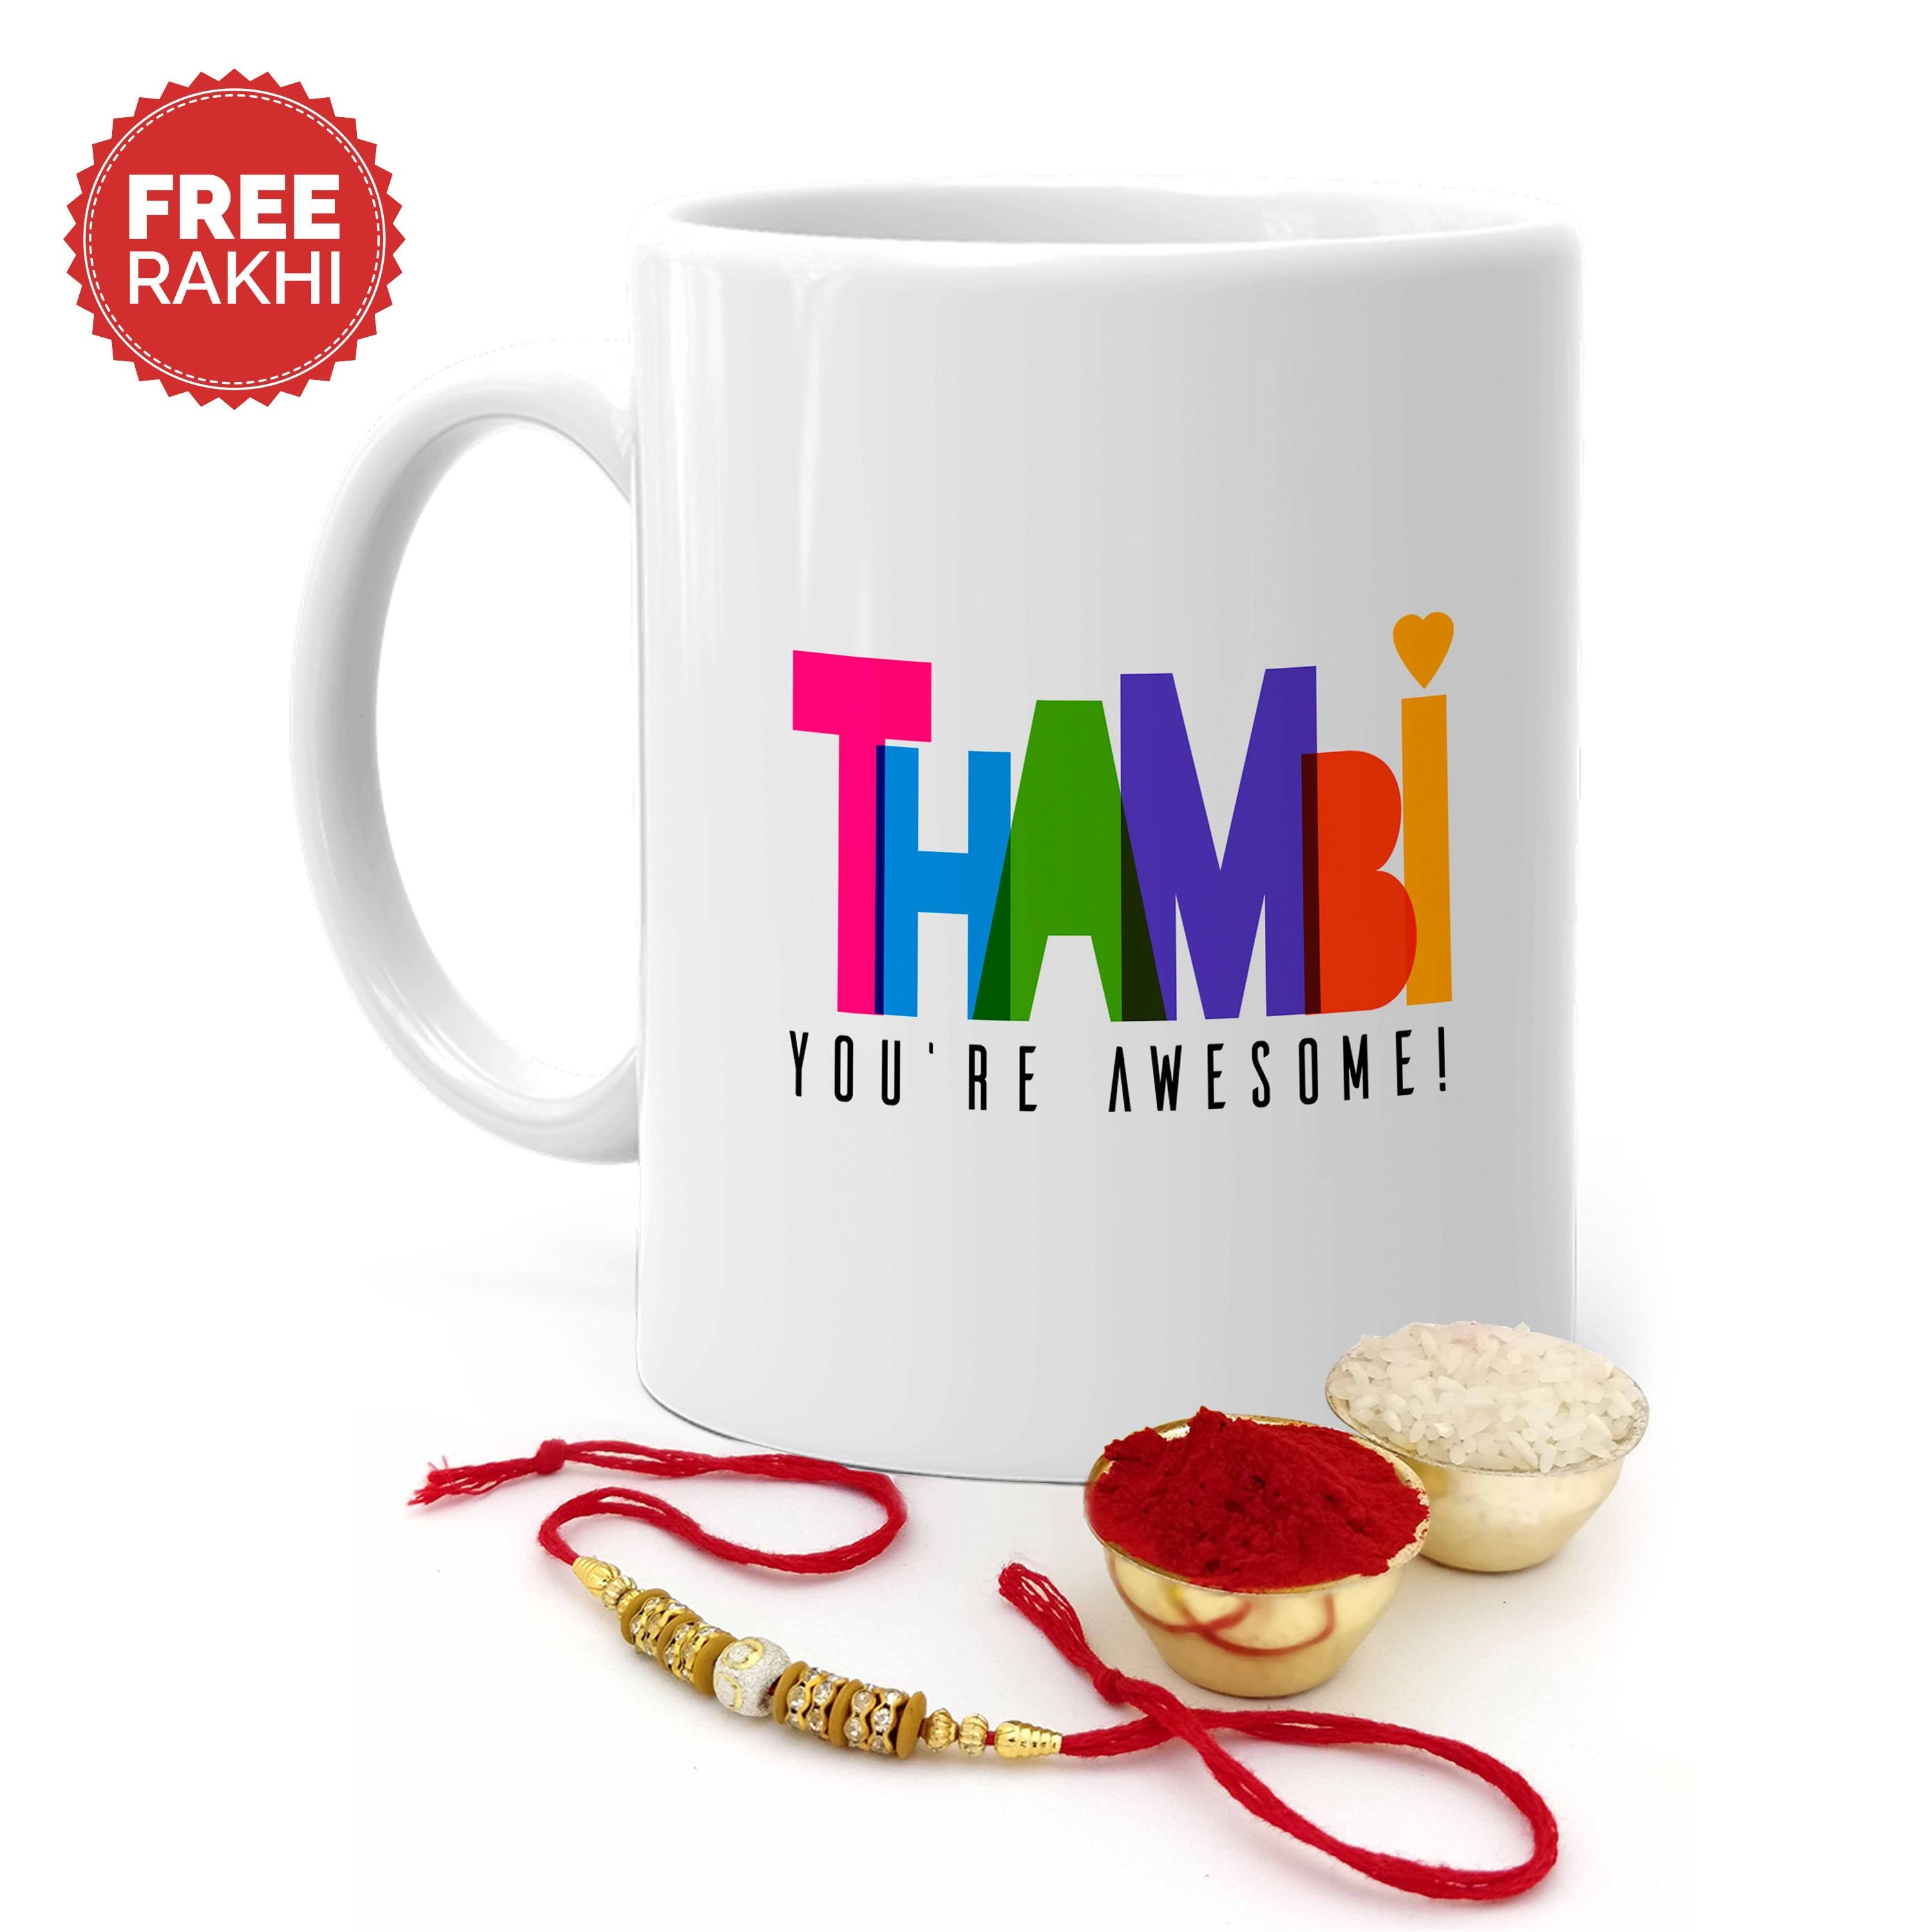 thambi-youre-awesome-mug